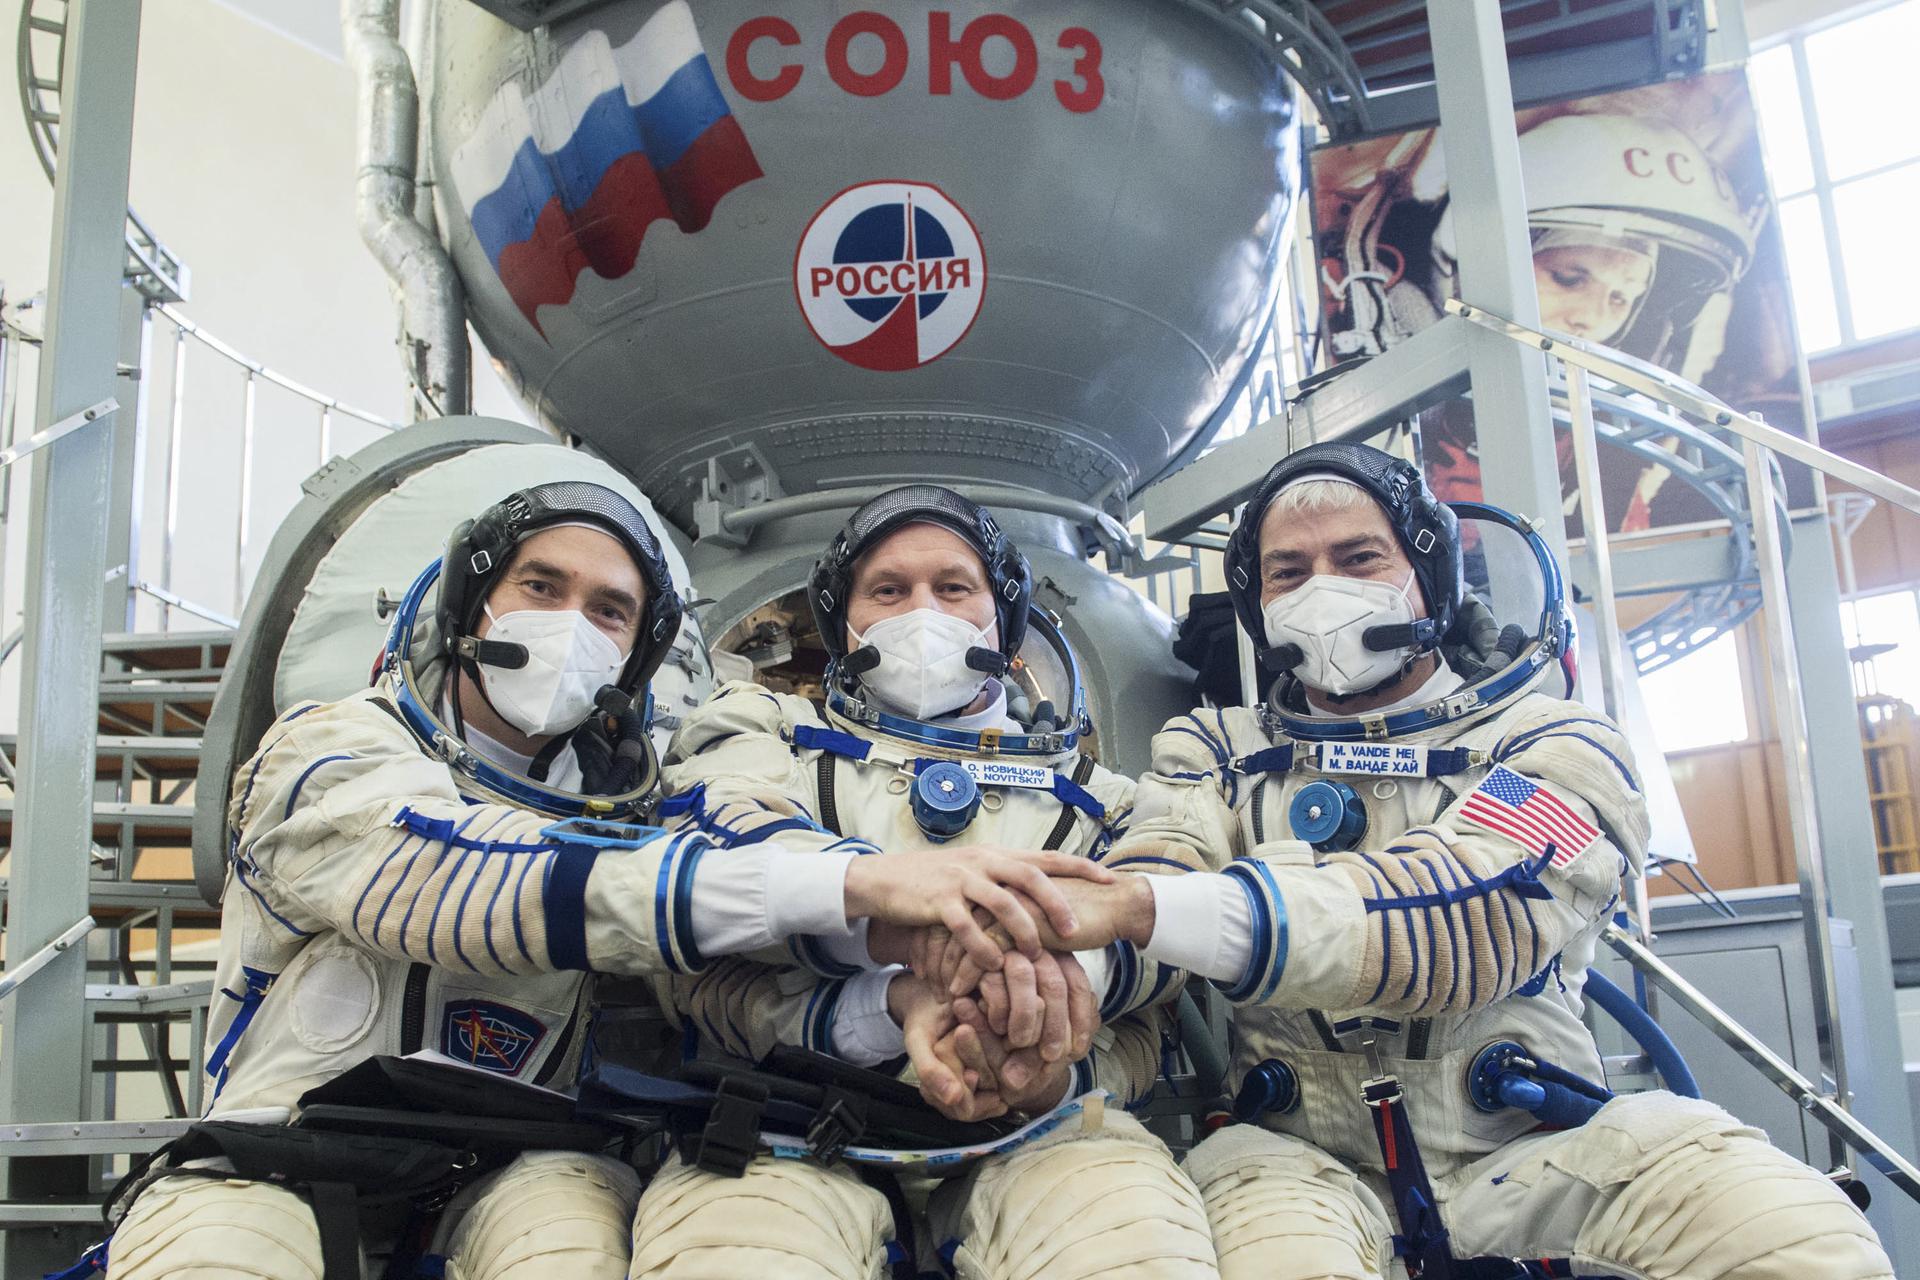 Cosmonauts Pyotr Dubrov of Roscosmos, left, and Oleg Novitskiy, center, of Roscosmos, and NASA astronaut Mark Vande Hei 